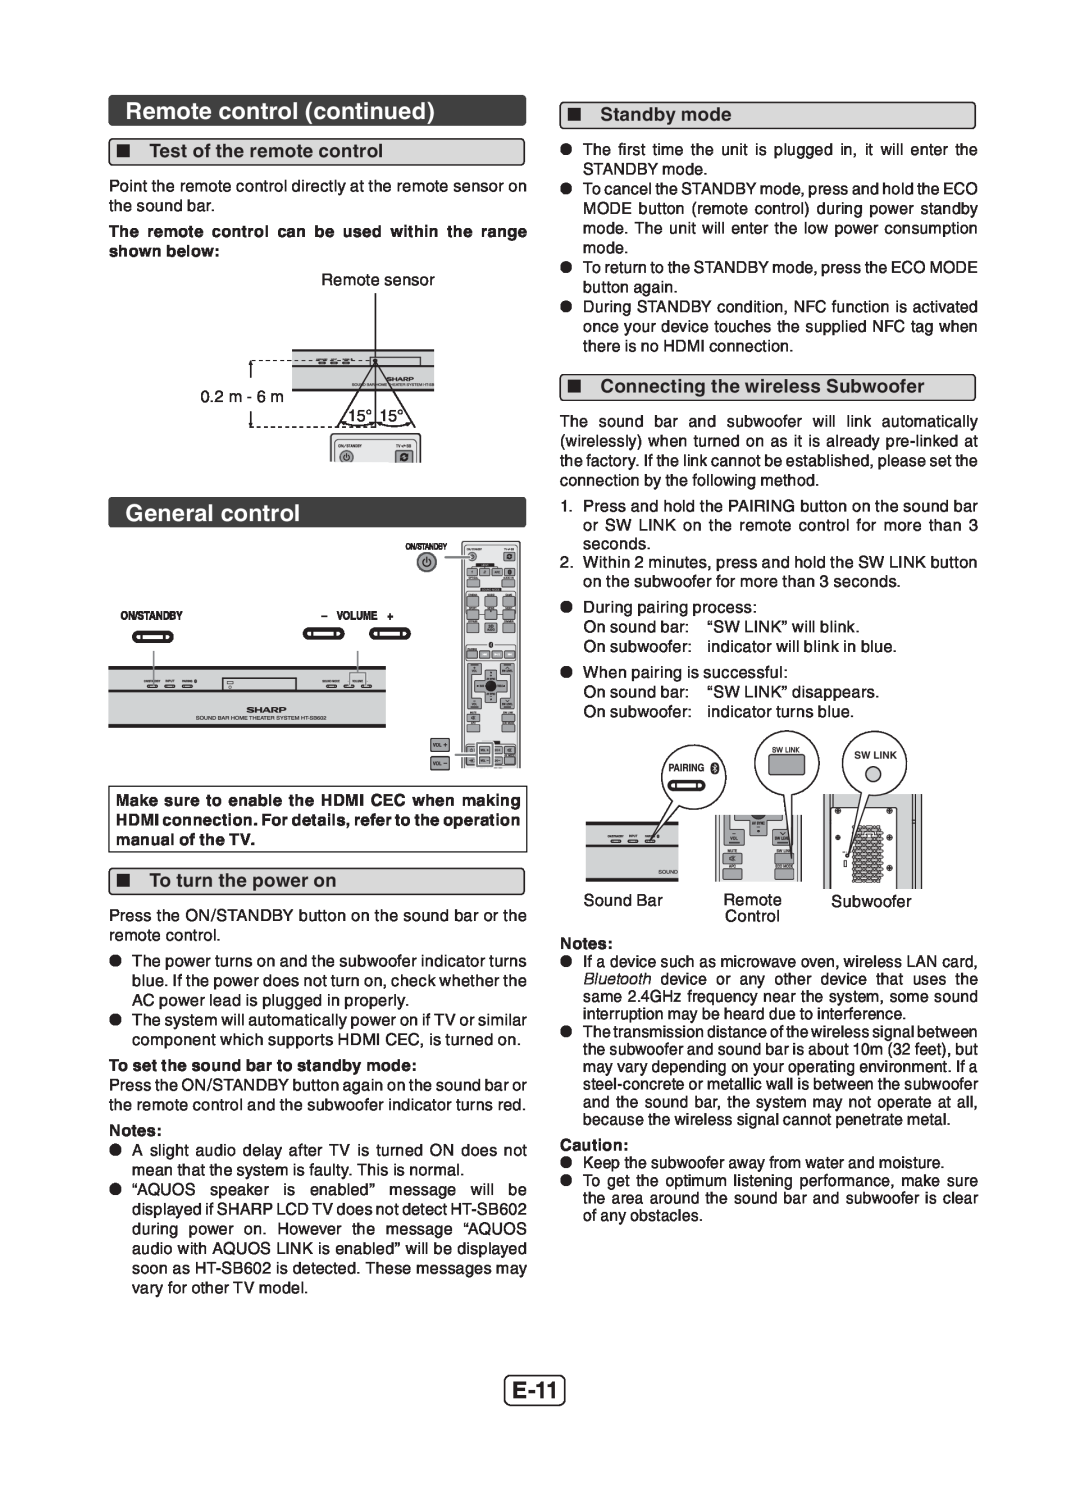 Sharp HT-SB602 operation manual Remote control continued, General control, E-11 